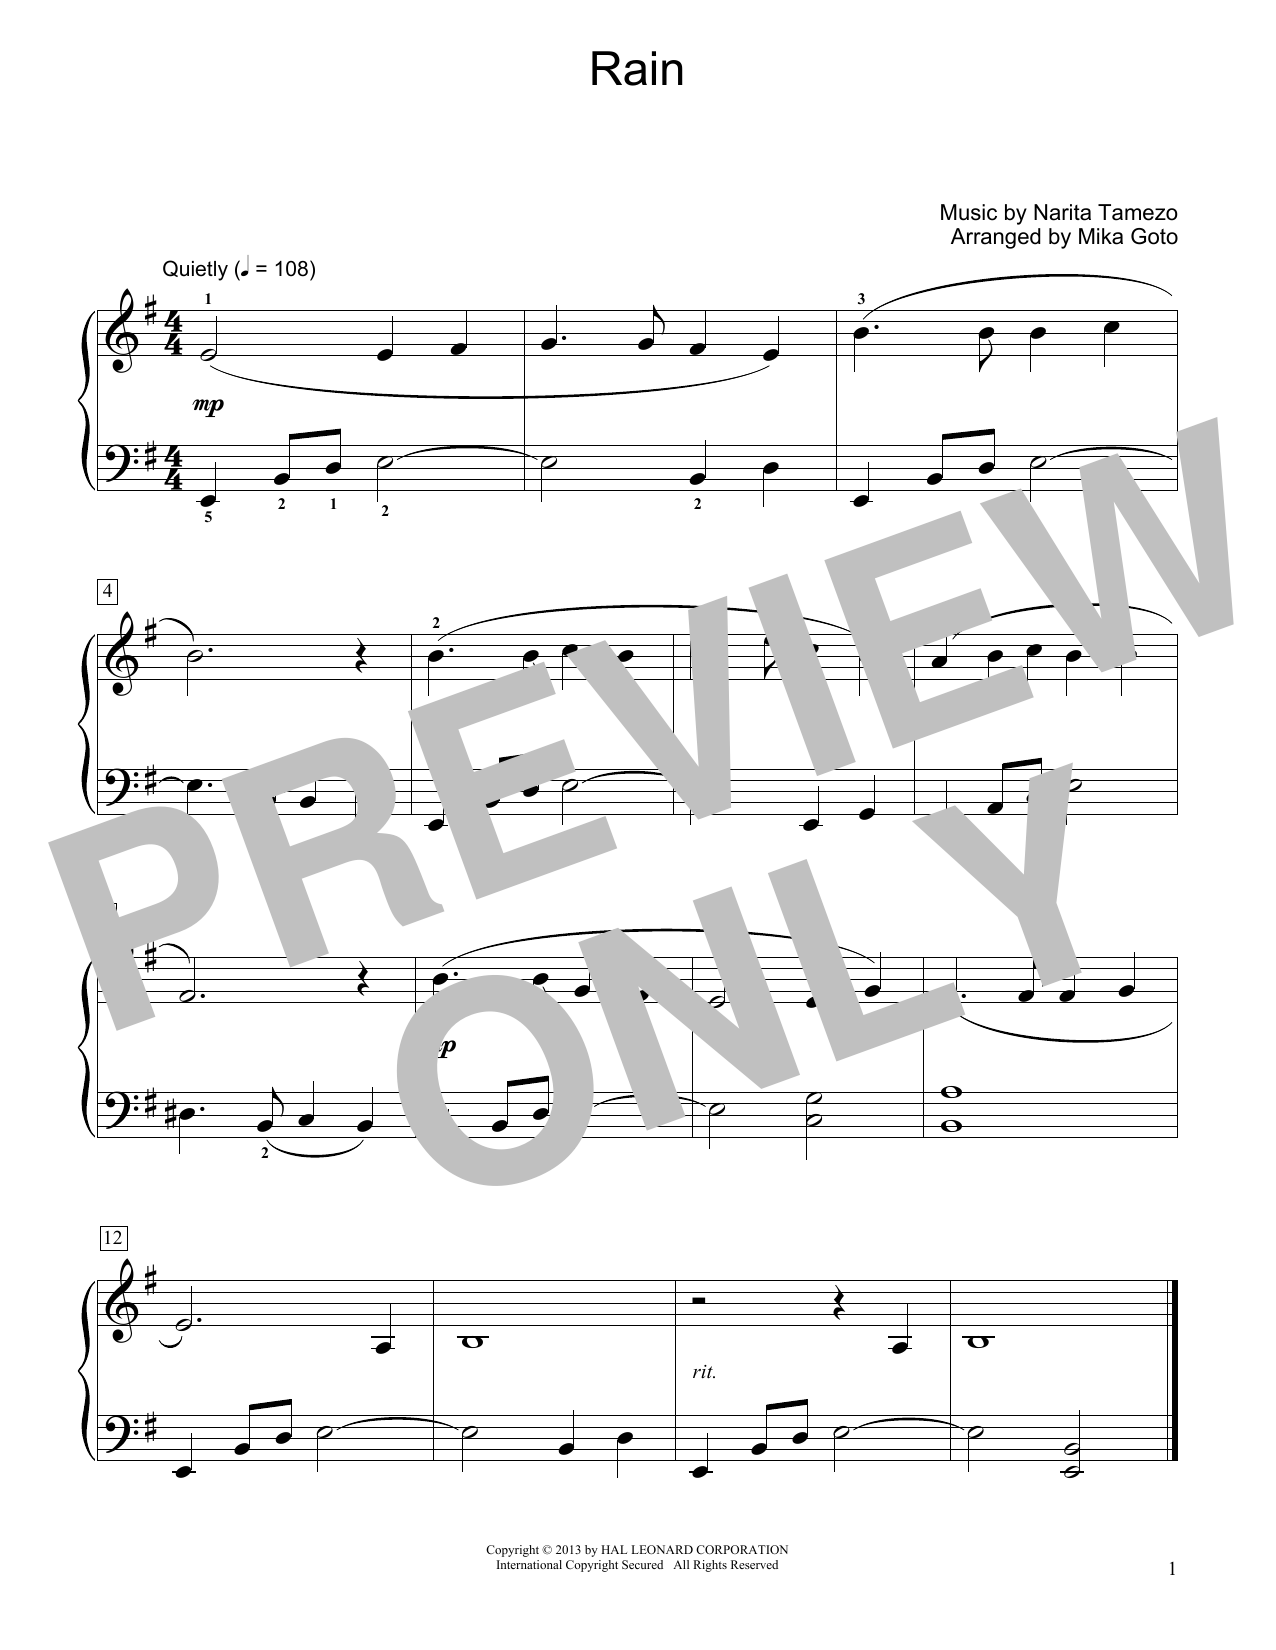 Download Narita Tamezo Rain (arr. Mika Goto) Sheet Music and learn how to play Educational Piano PDF digital score in minutes